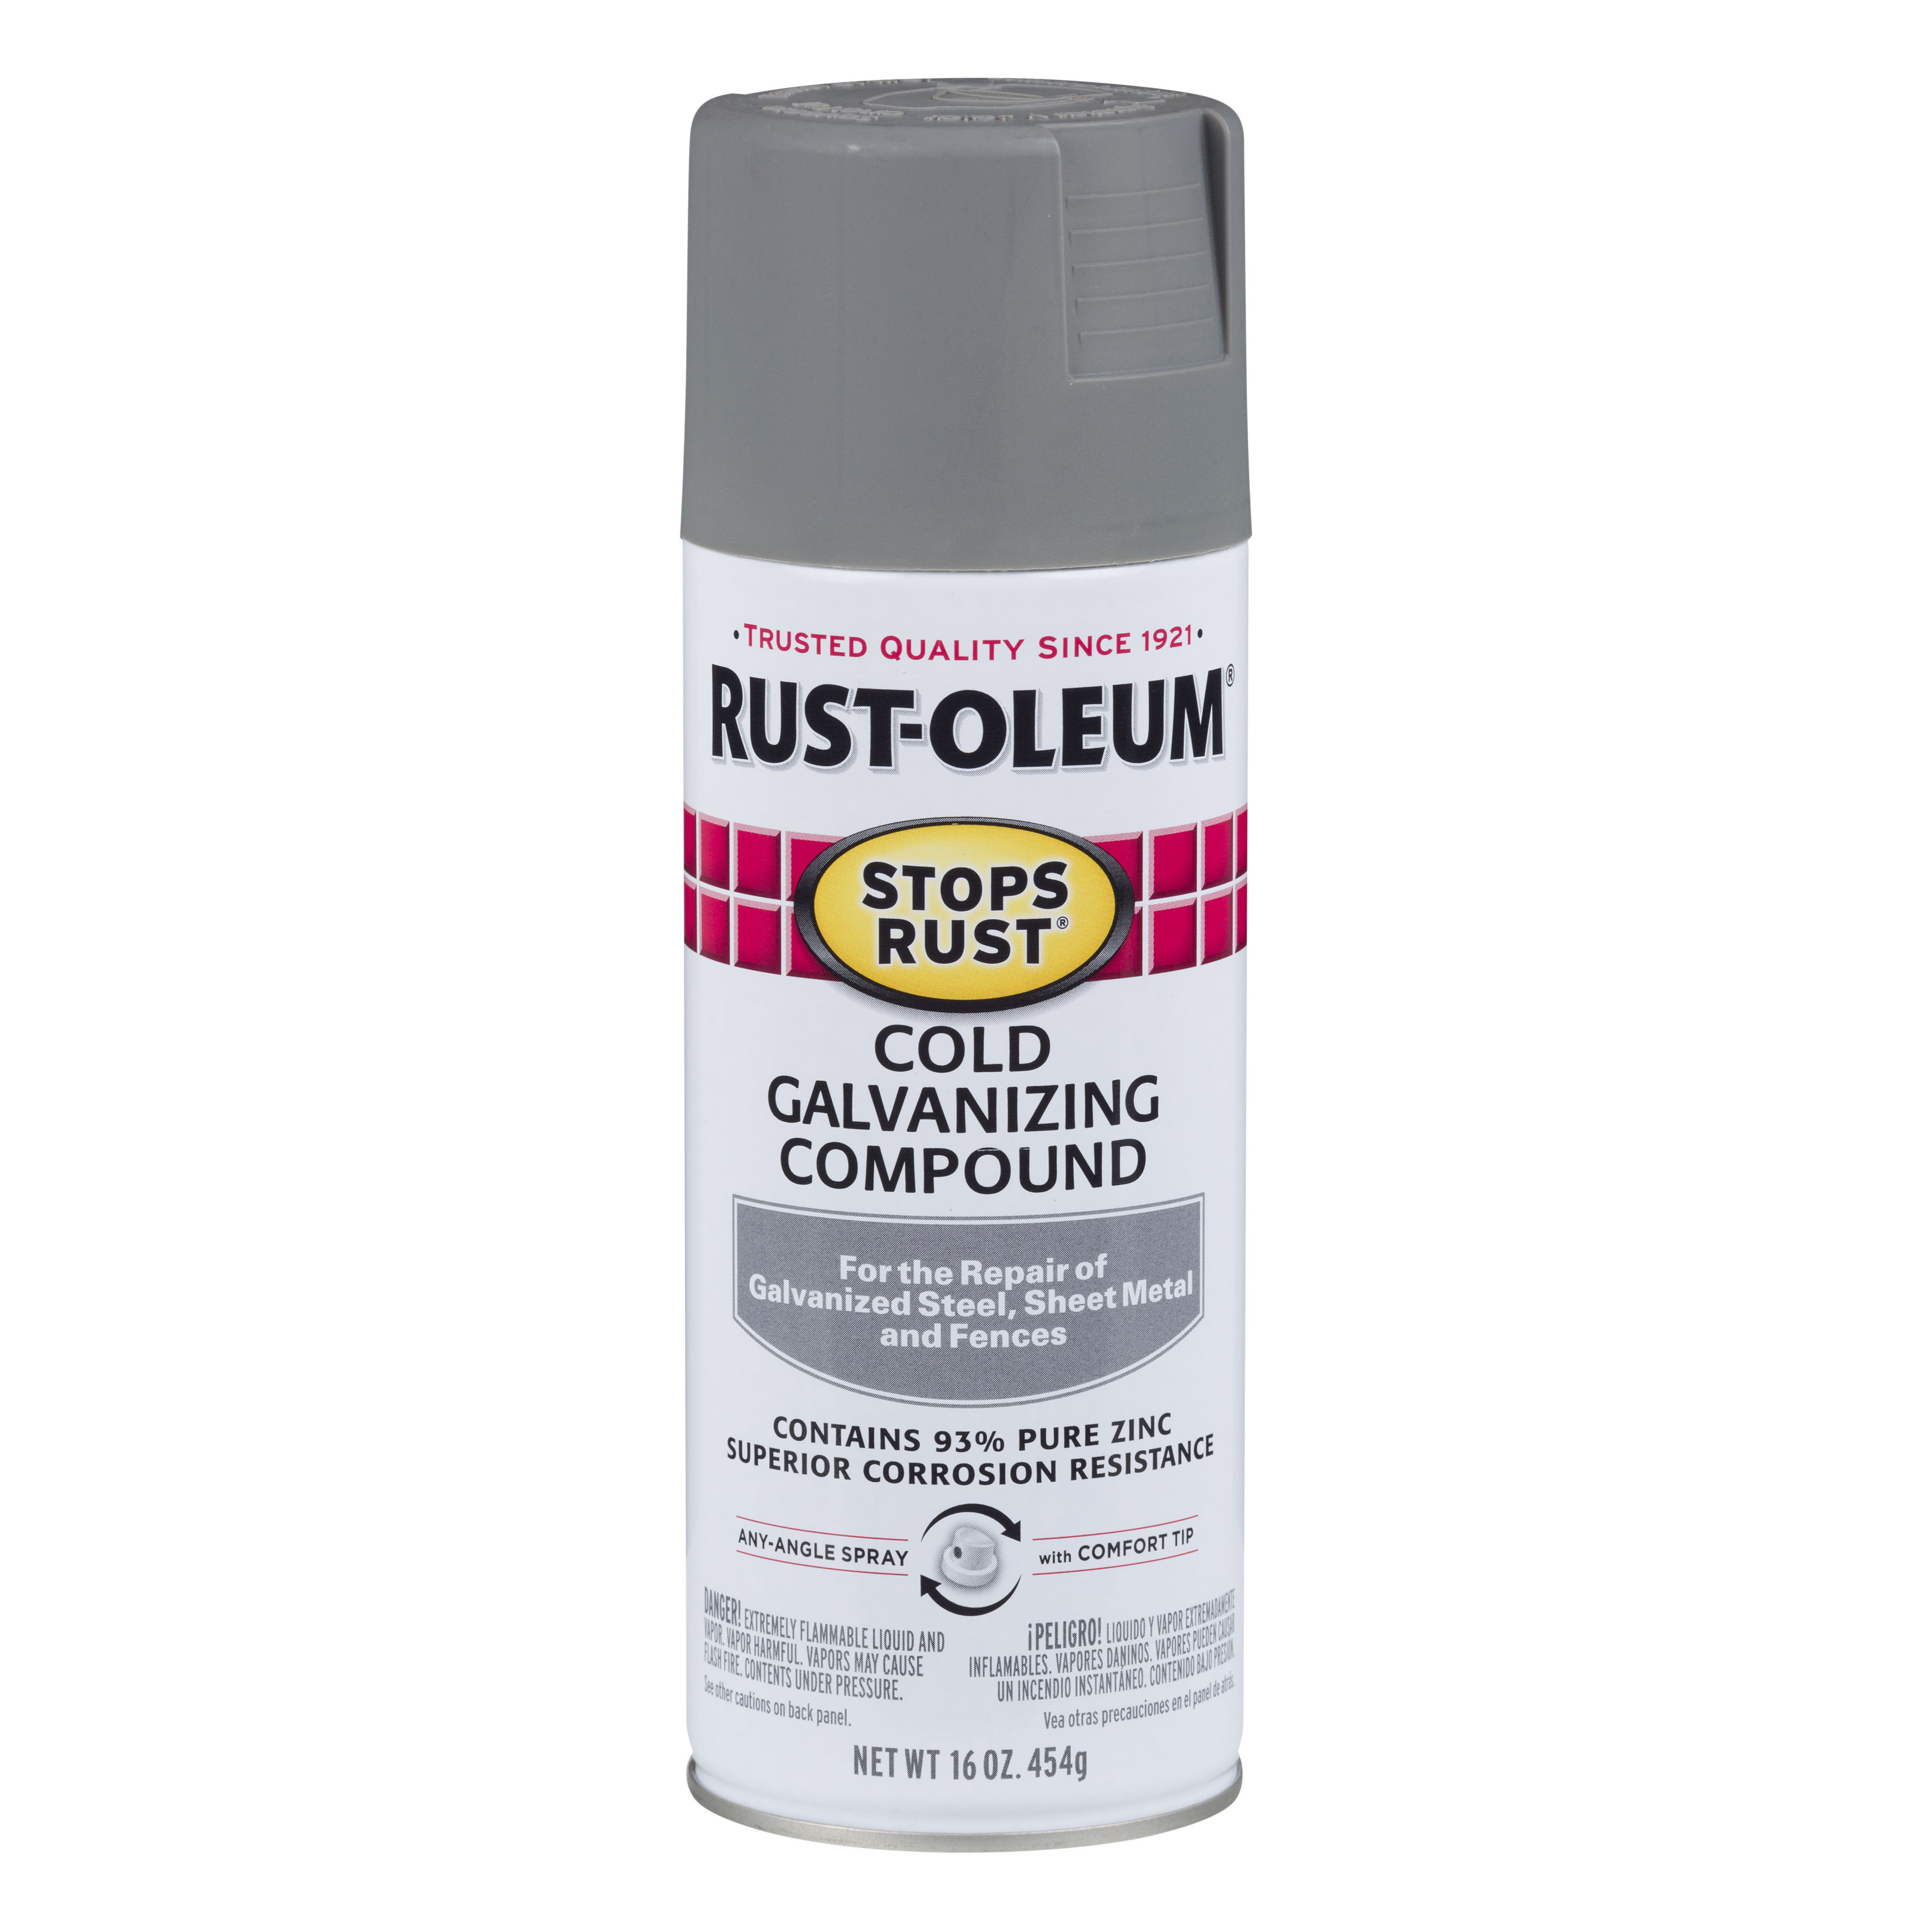 RUST-OLEUM STOPS RUST 7785830 Galvanizing Compound Spray, Gray, Matte, 16 oz - 1